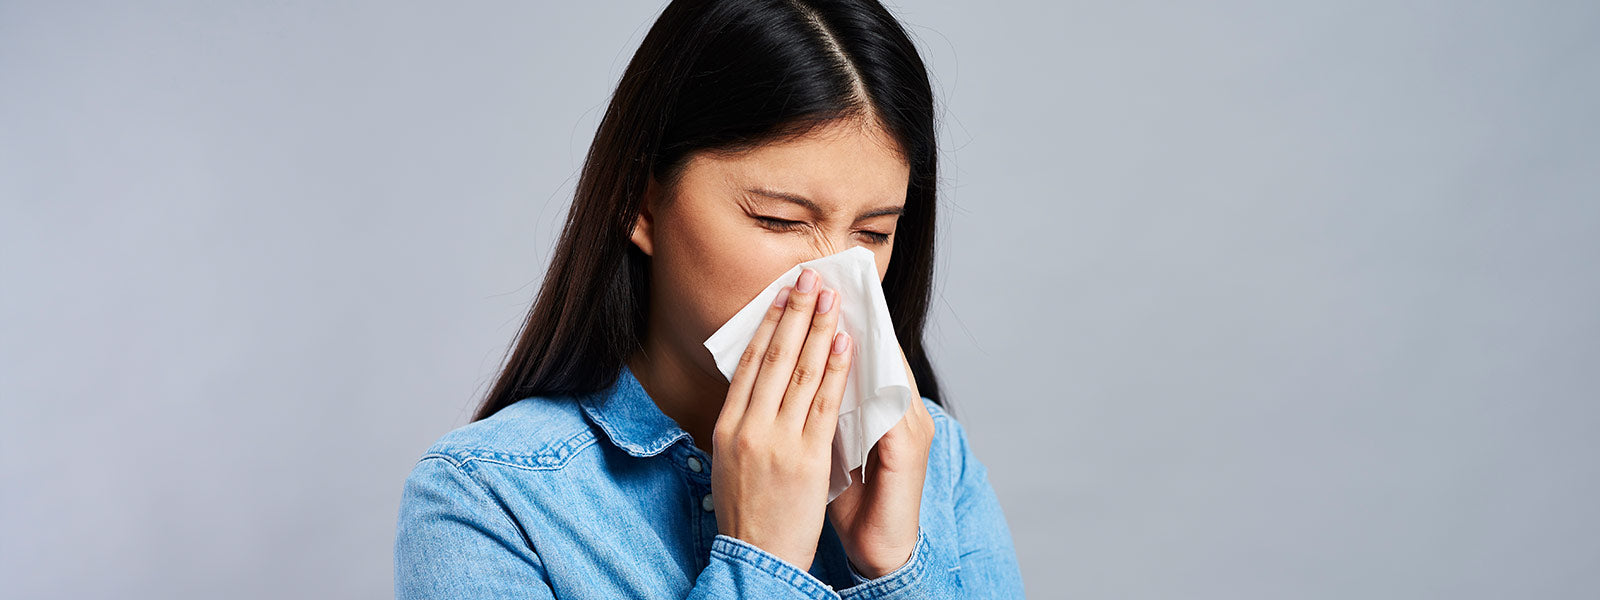 femme ayant des allergies aux moisissures